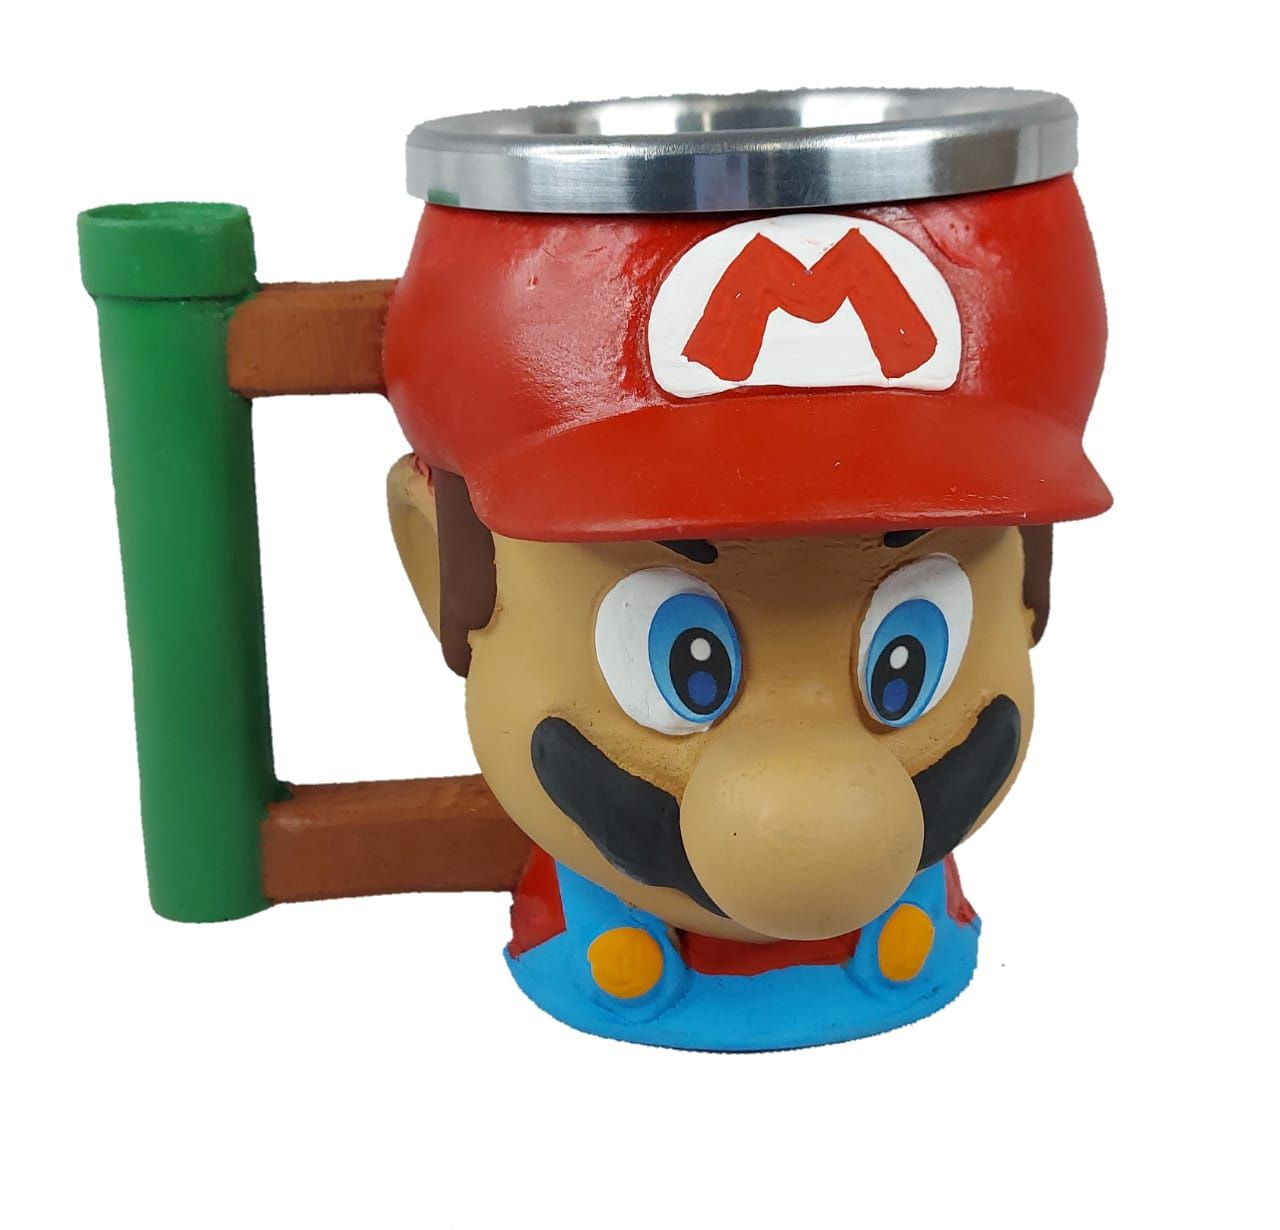 Caneca/Copo Super Mario Bros Resina 3D Jogo Mario